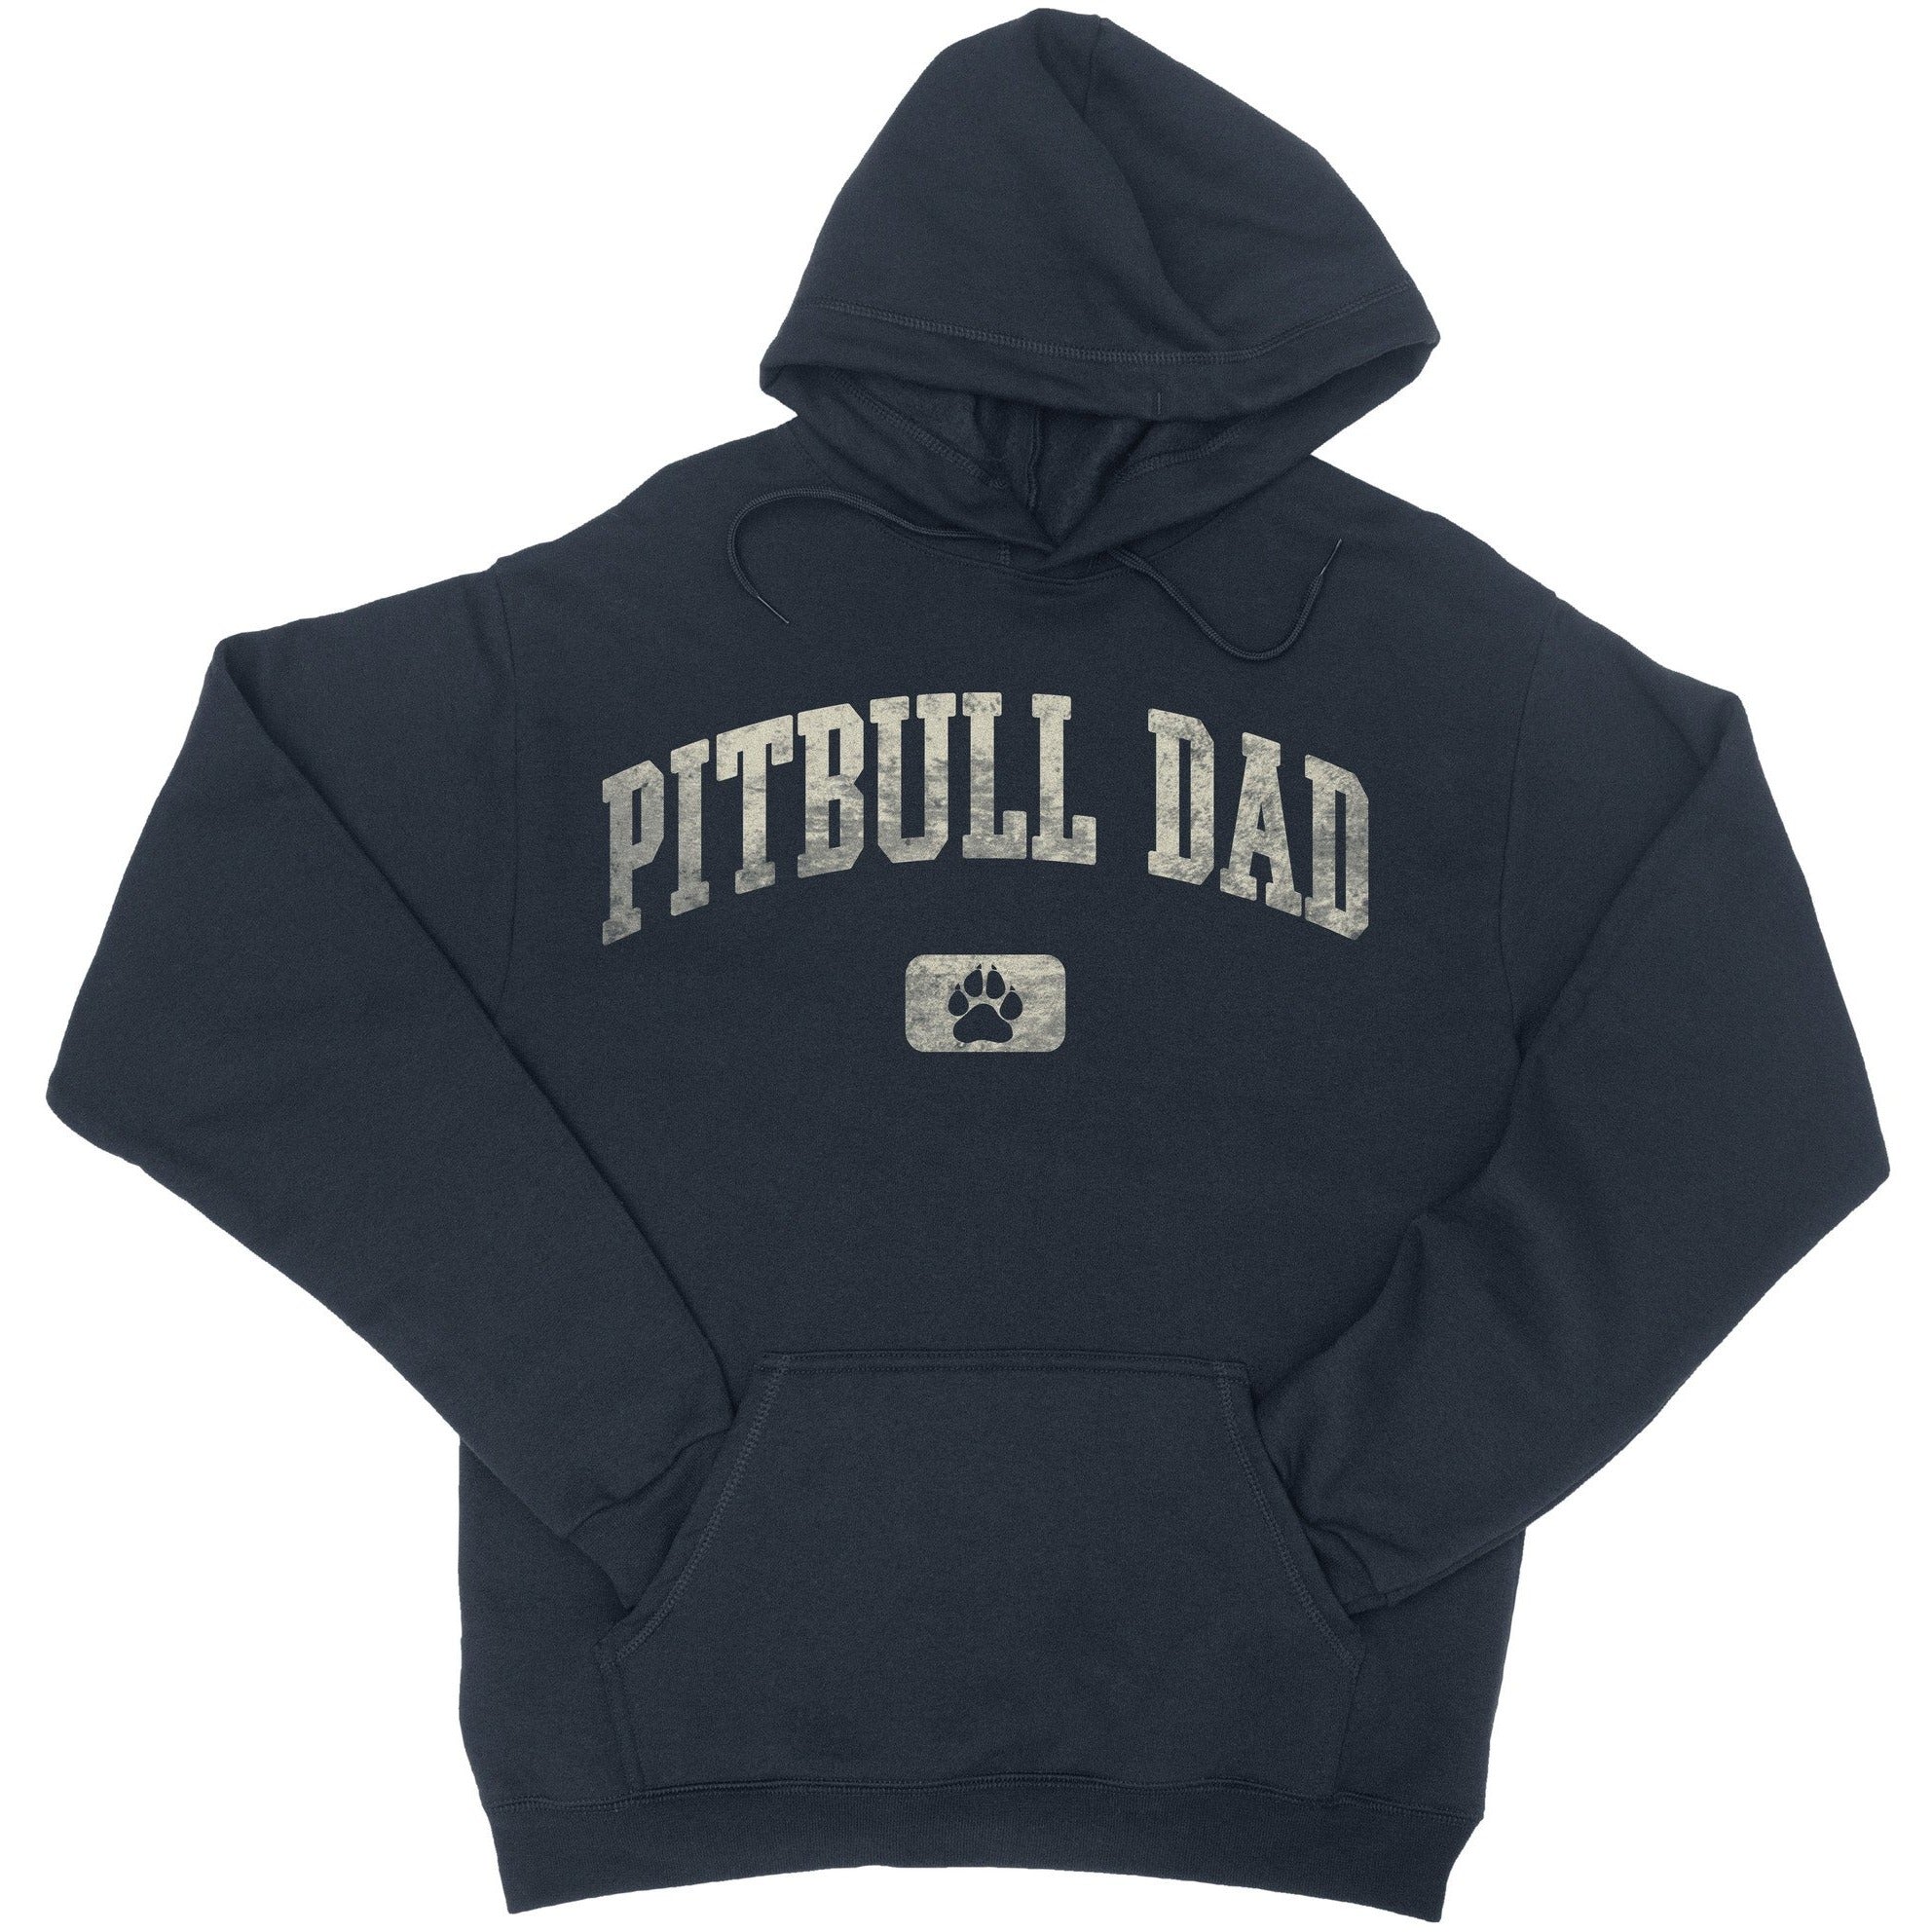 pitbull dad hoodie